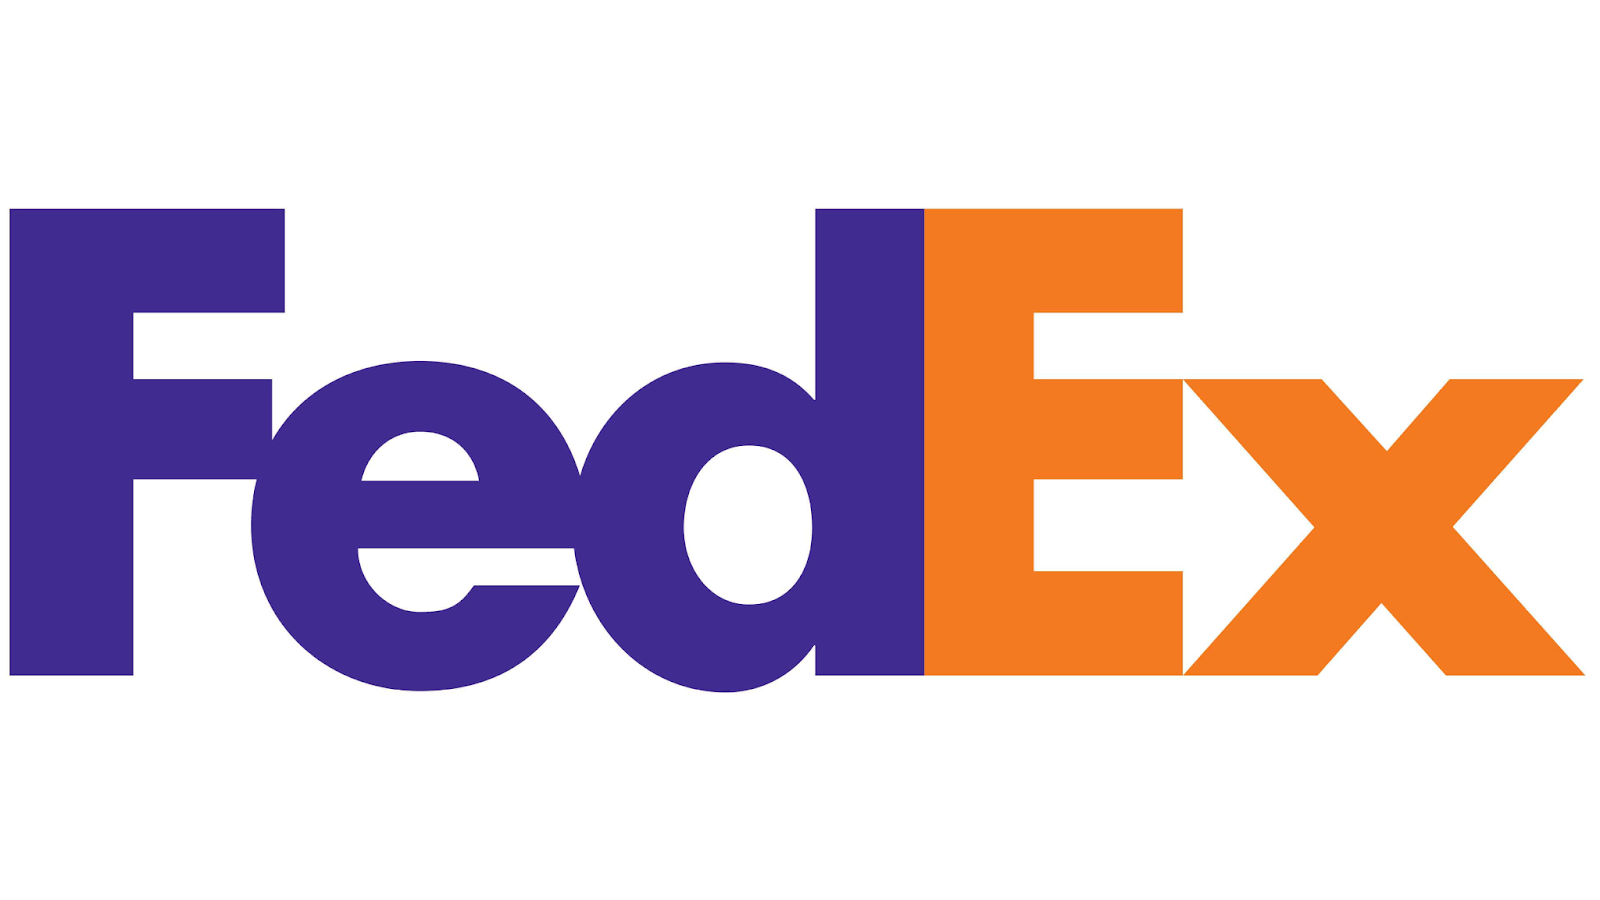 FedEx's Univers